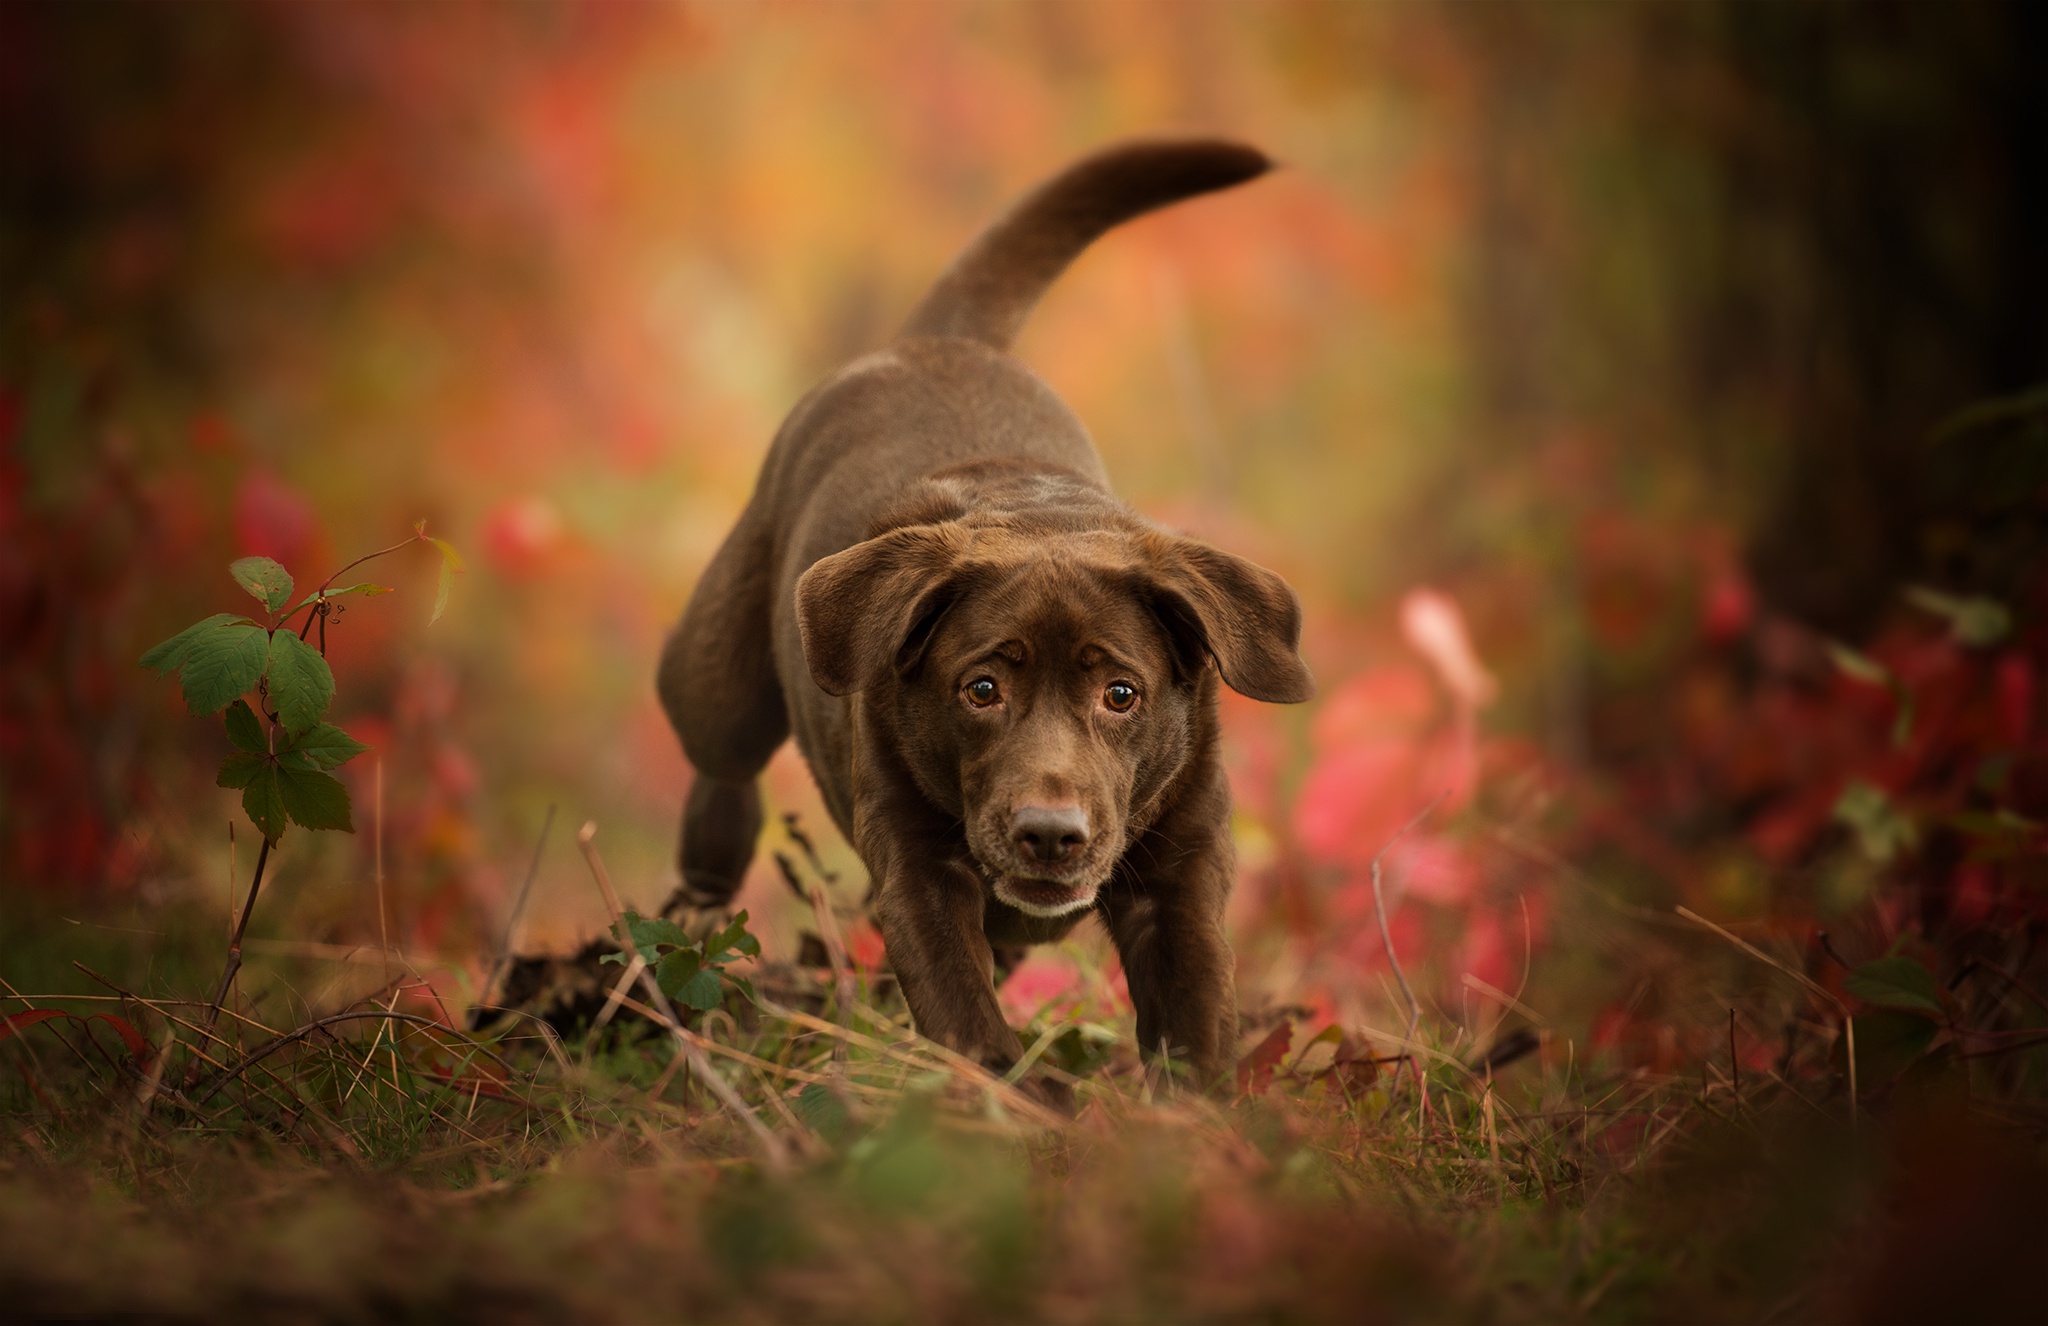 Baby Animal Dog Labrador Retriever Pet Puppy 2048x1326